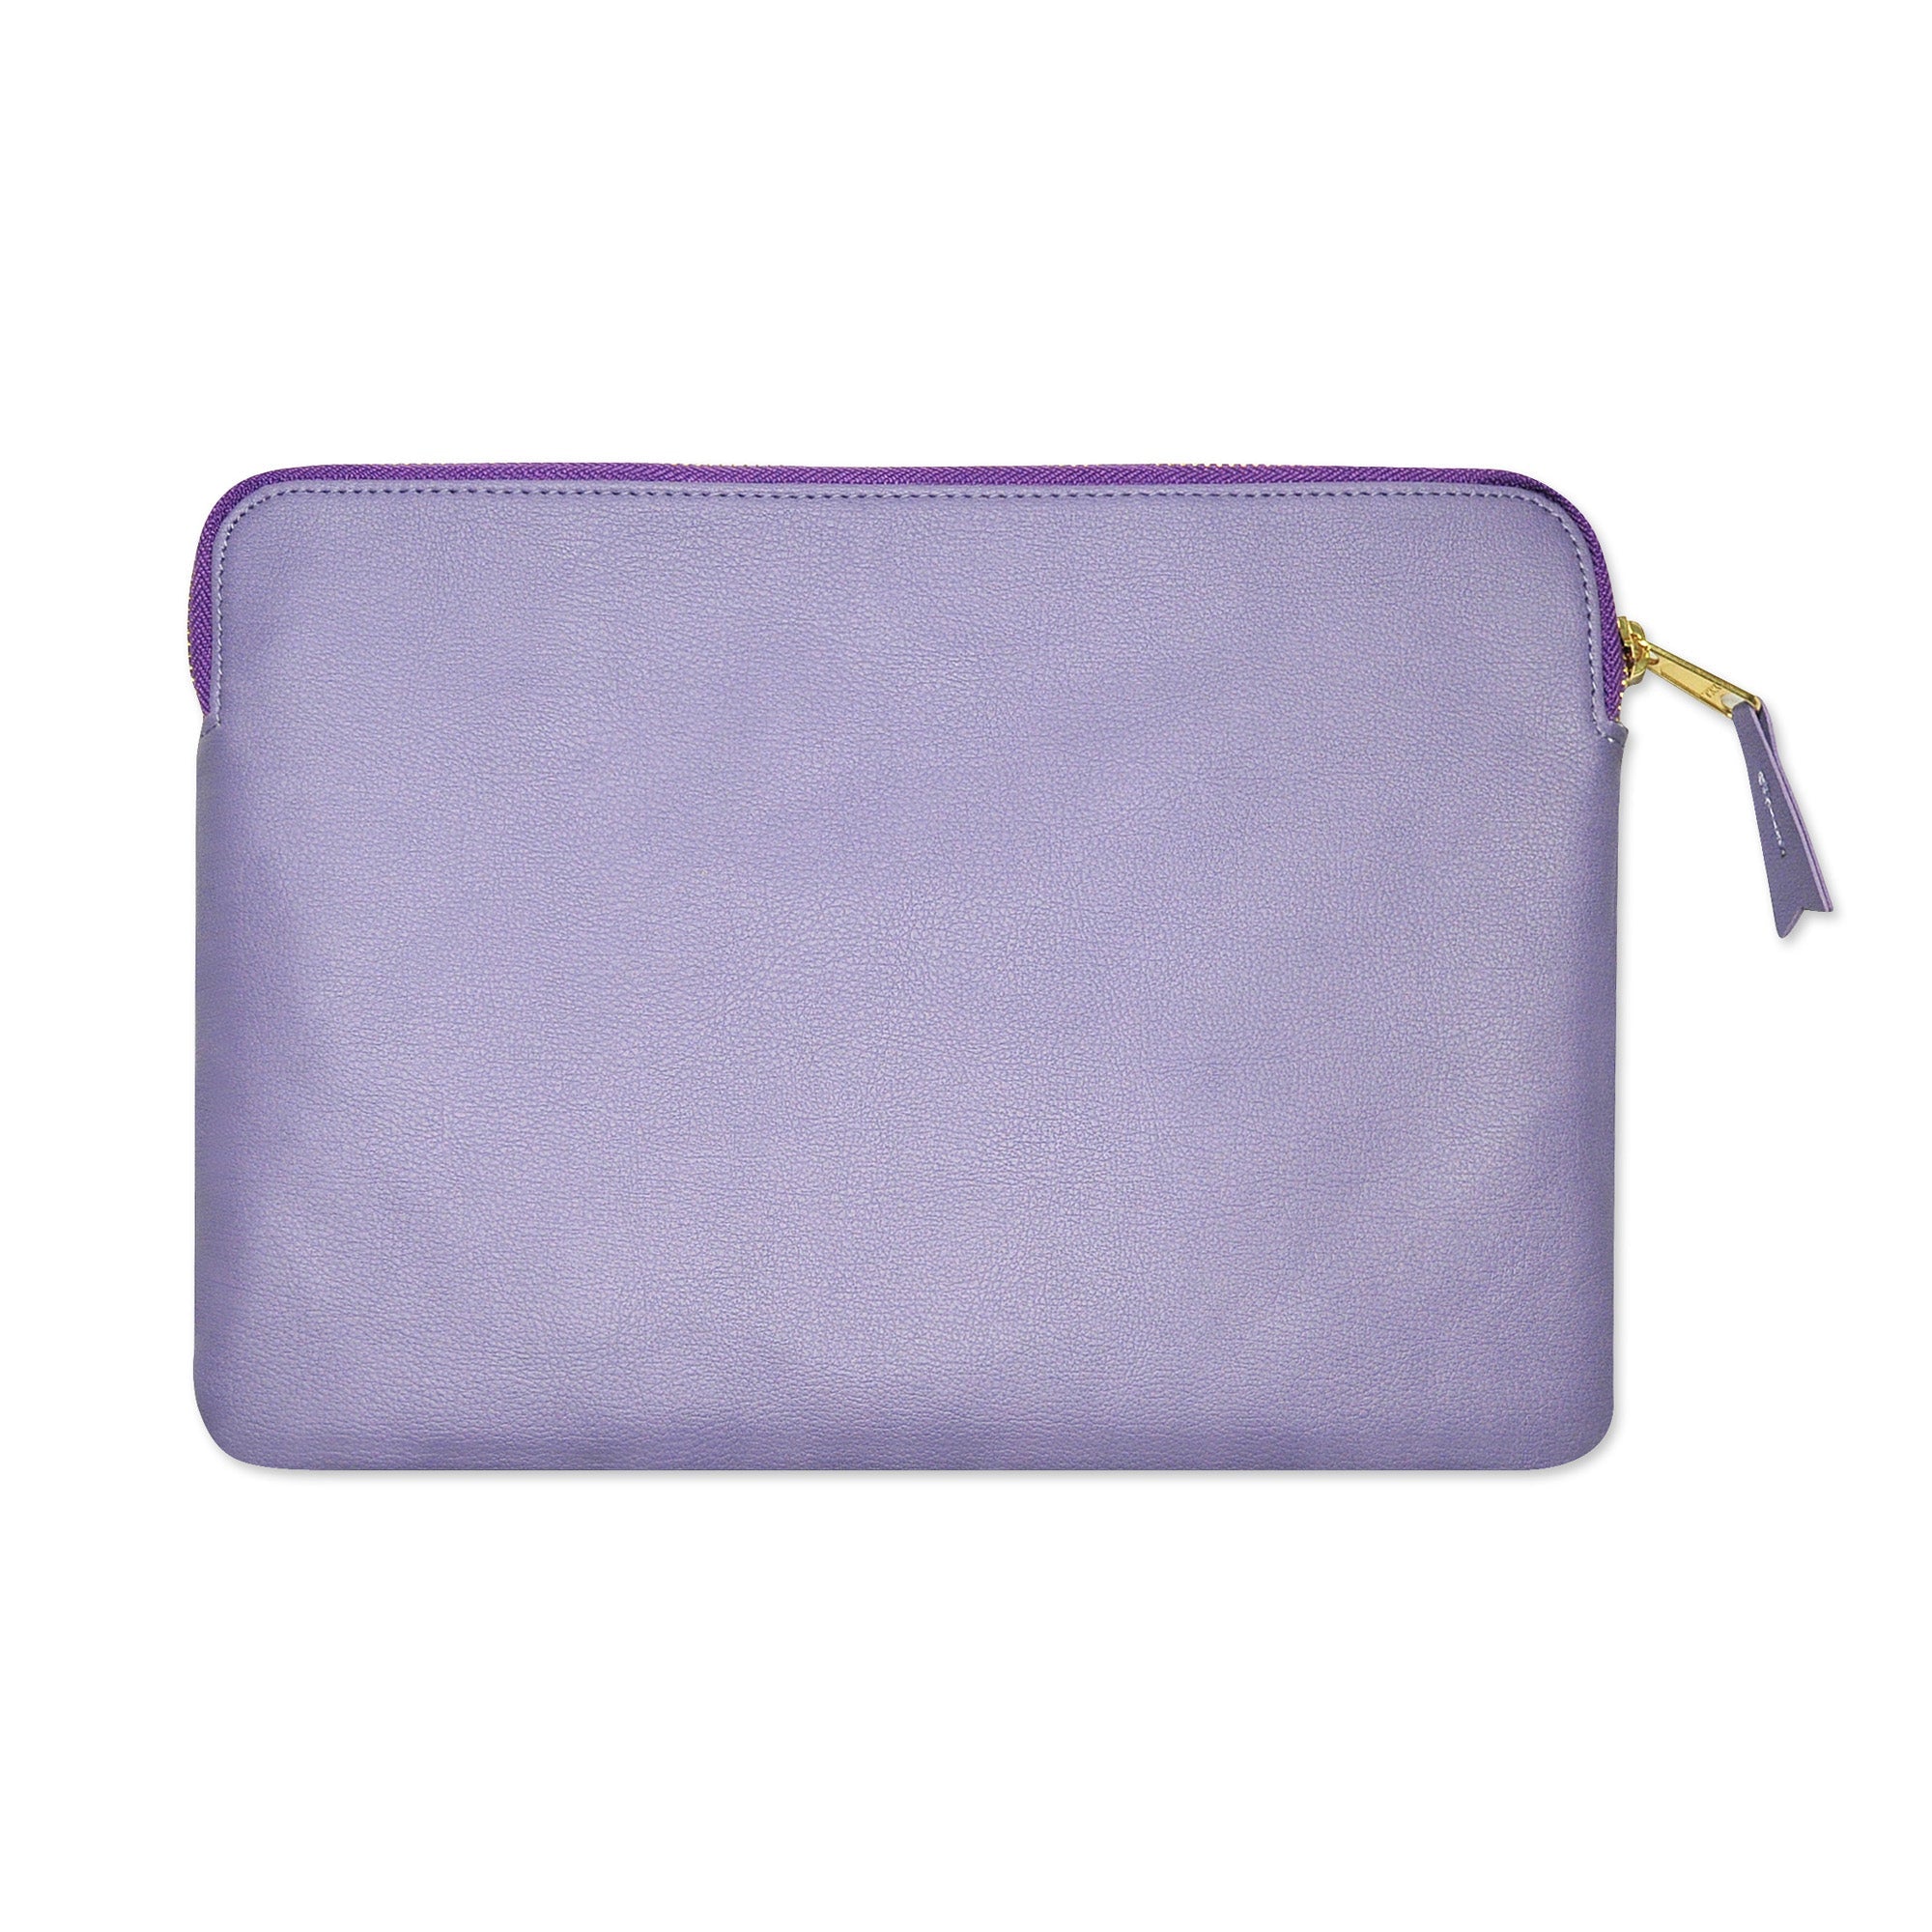 Lavender Tablet sleeve with YKK zipper closure